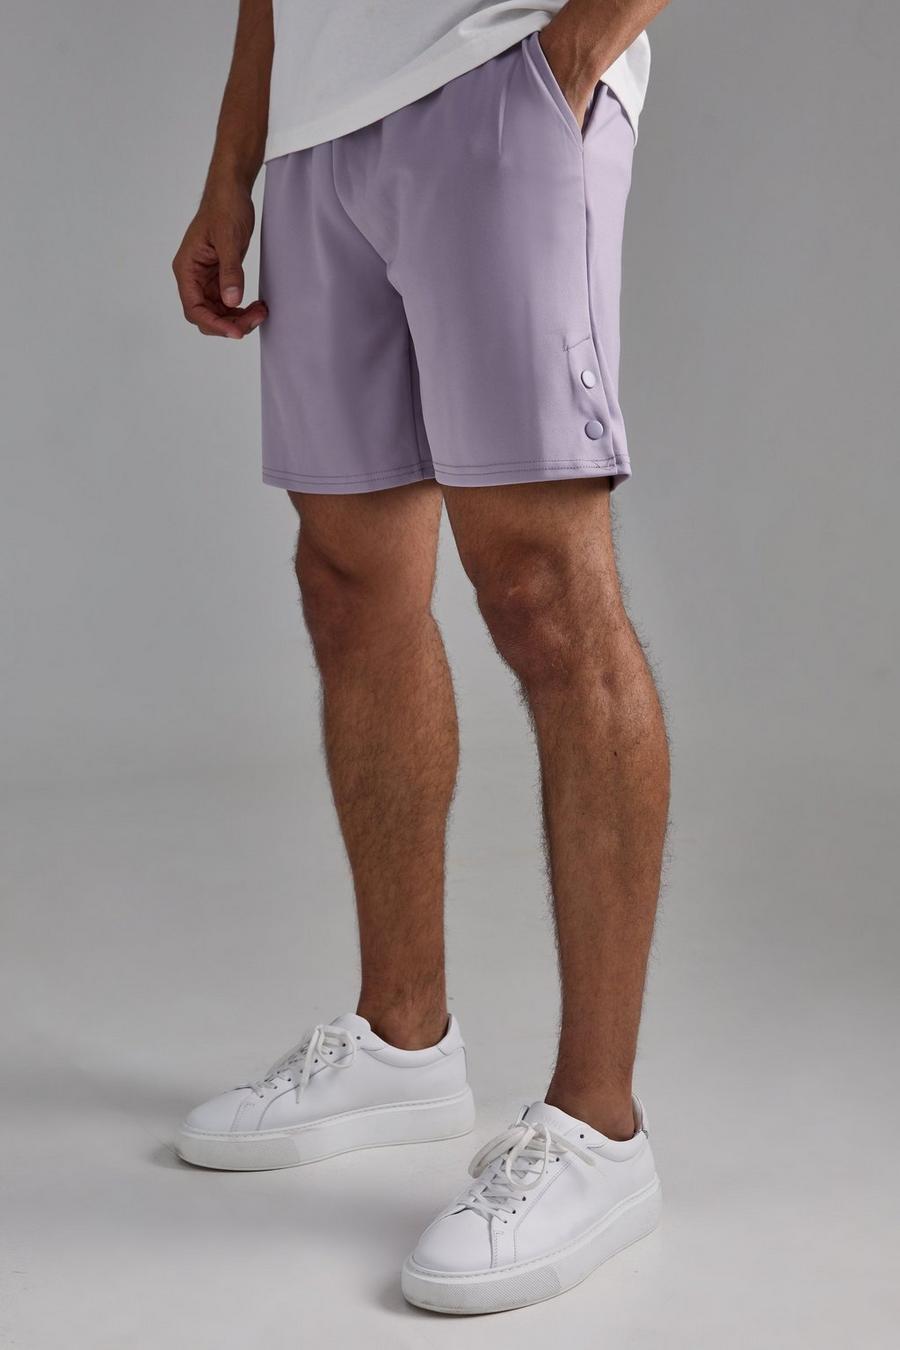 Lockere Scuba Shorts mit Druckknöpfen, Lilac